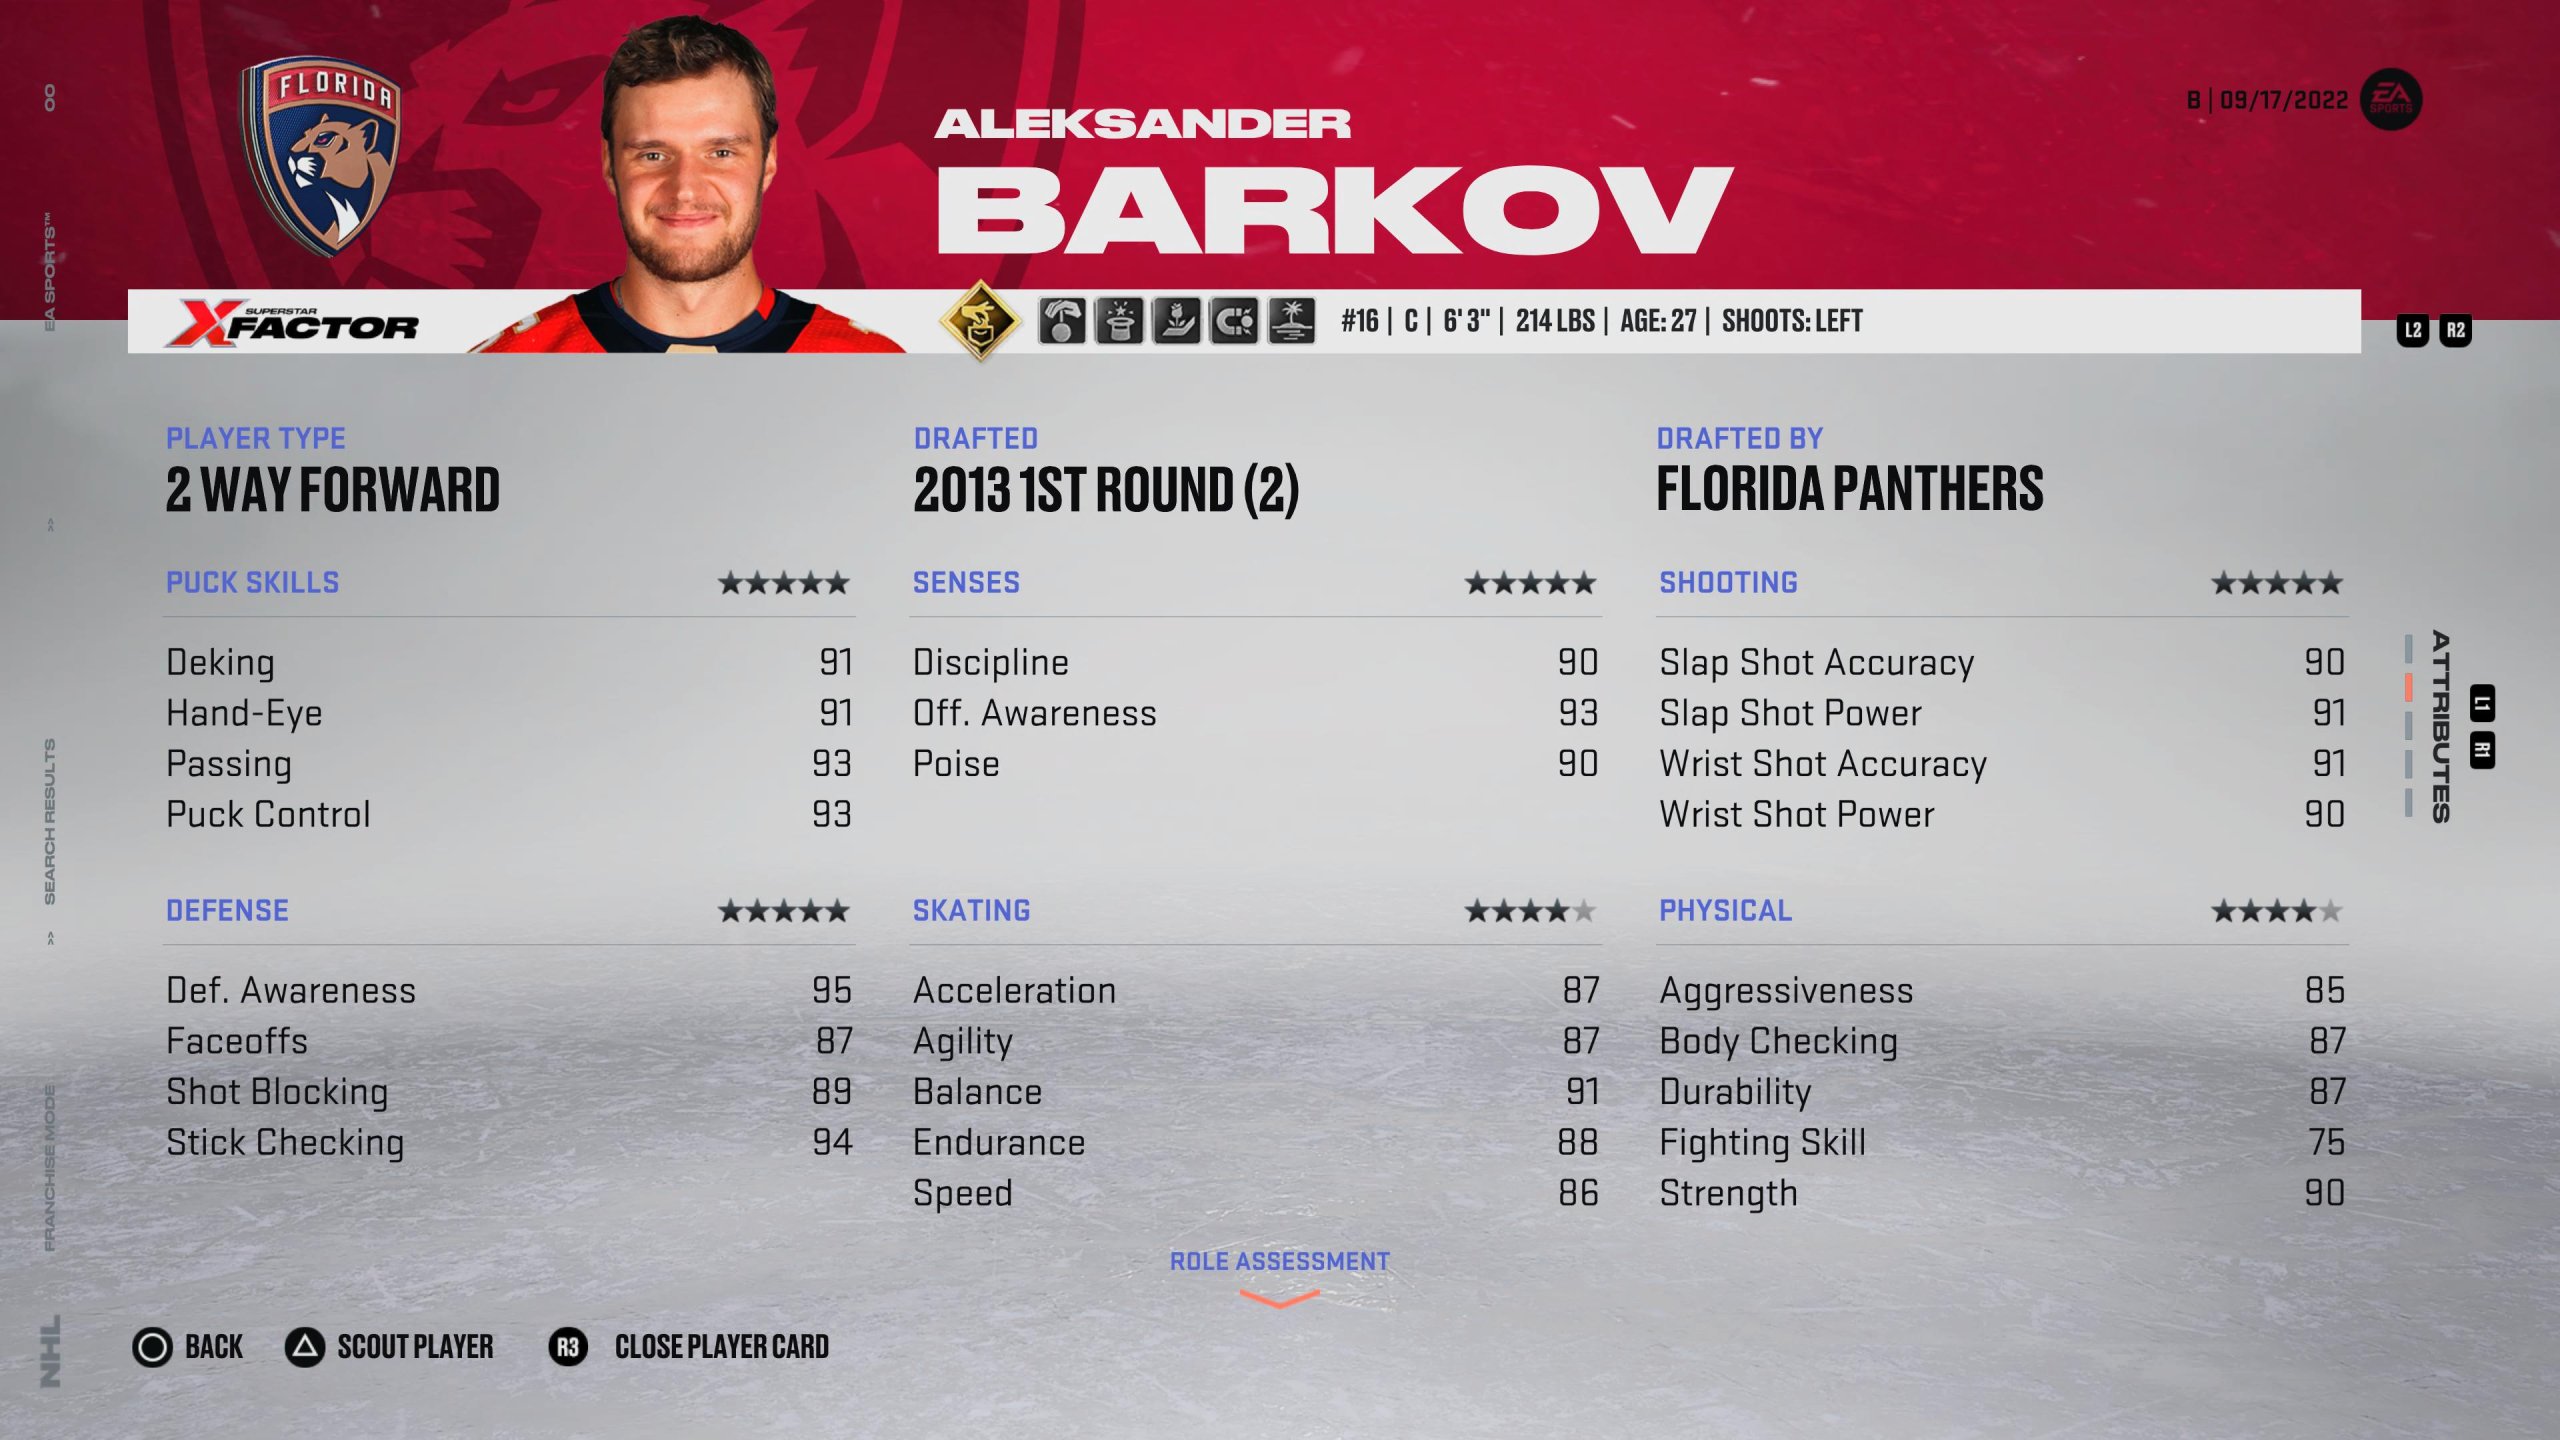 Aleksander Barkov - NHL 23 で見られる最高のセンターの 1 つ